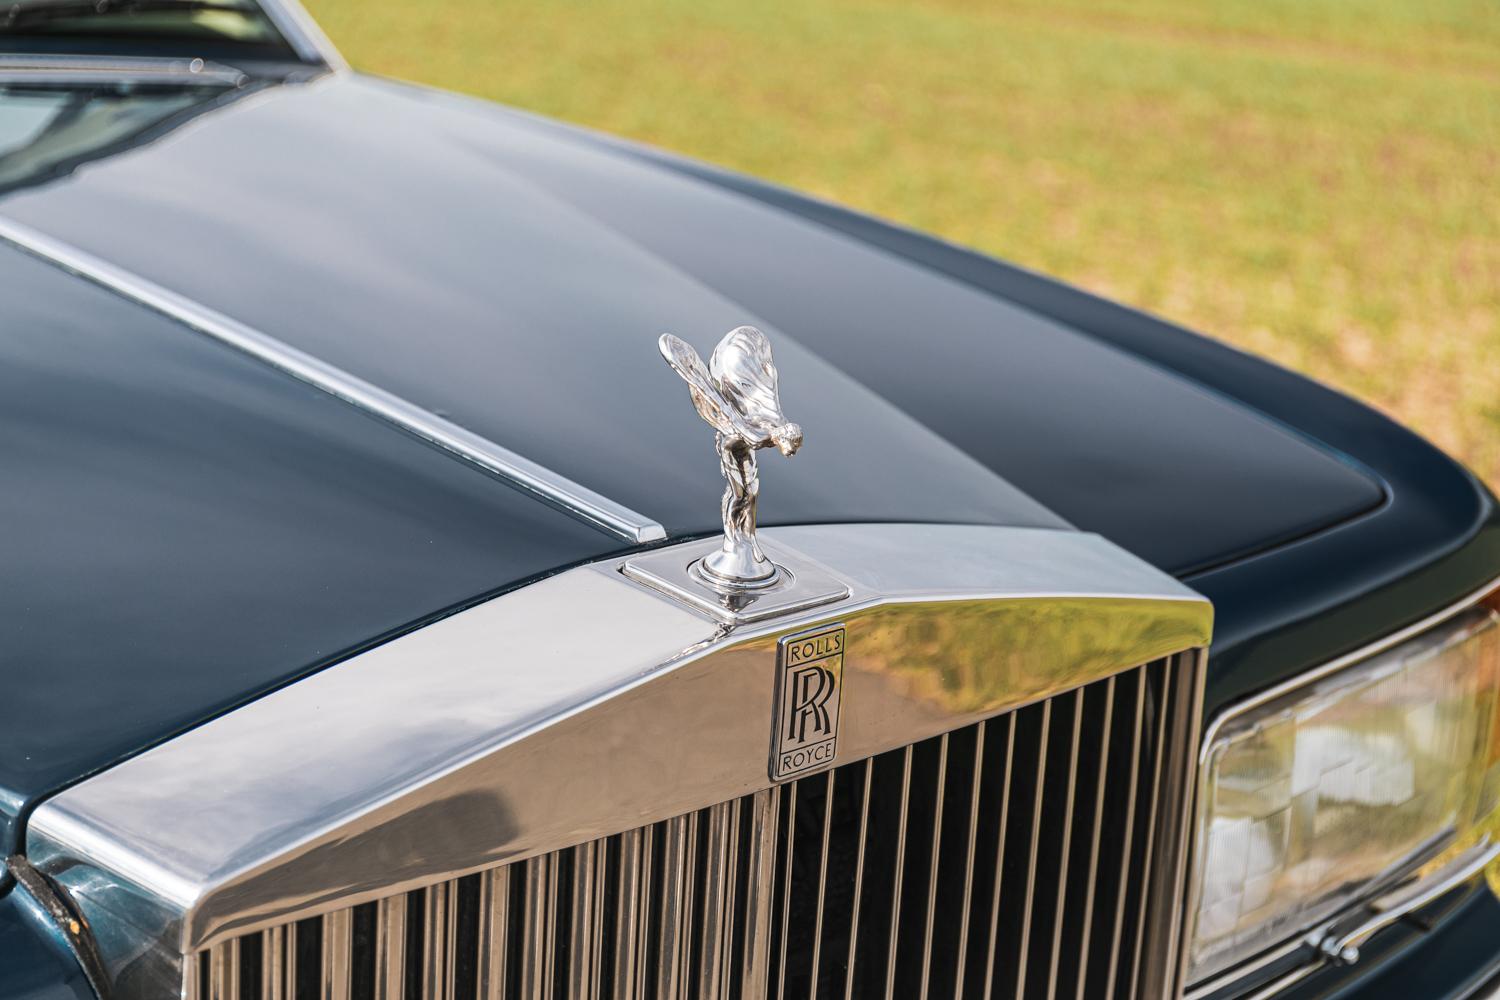 1982 Rolls-Royce Silver Spirit